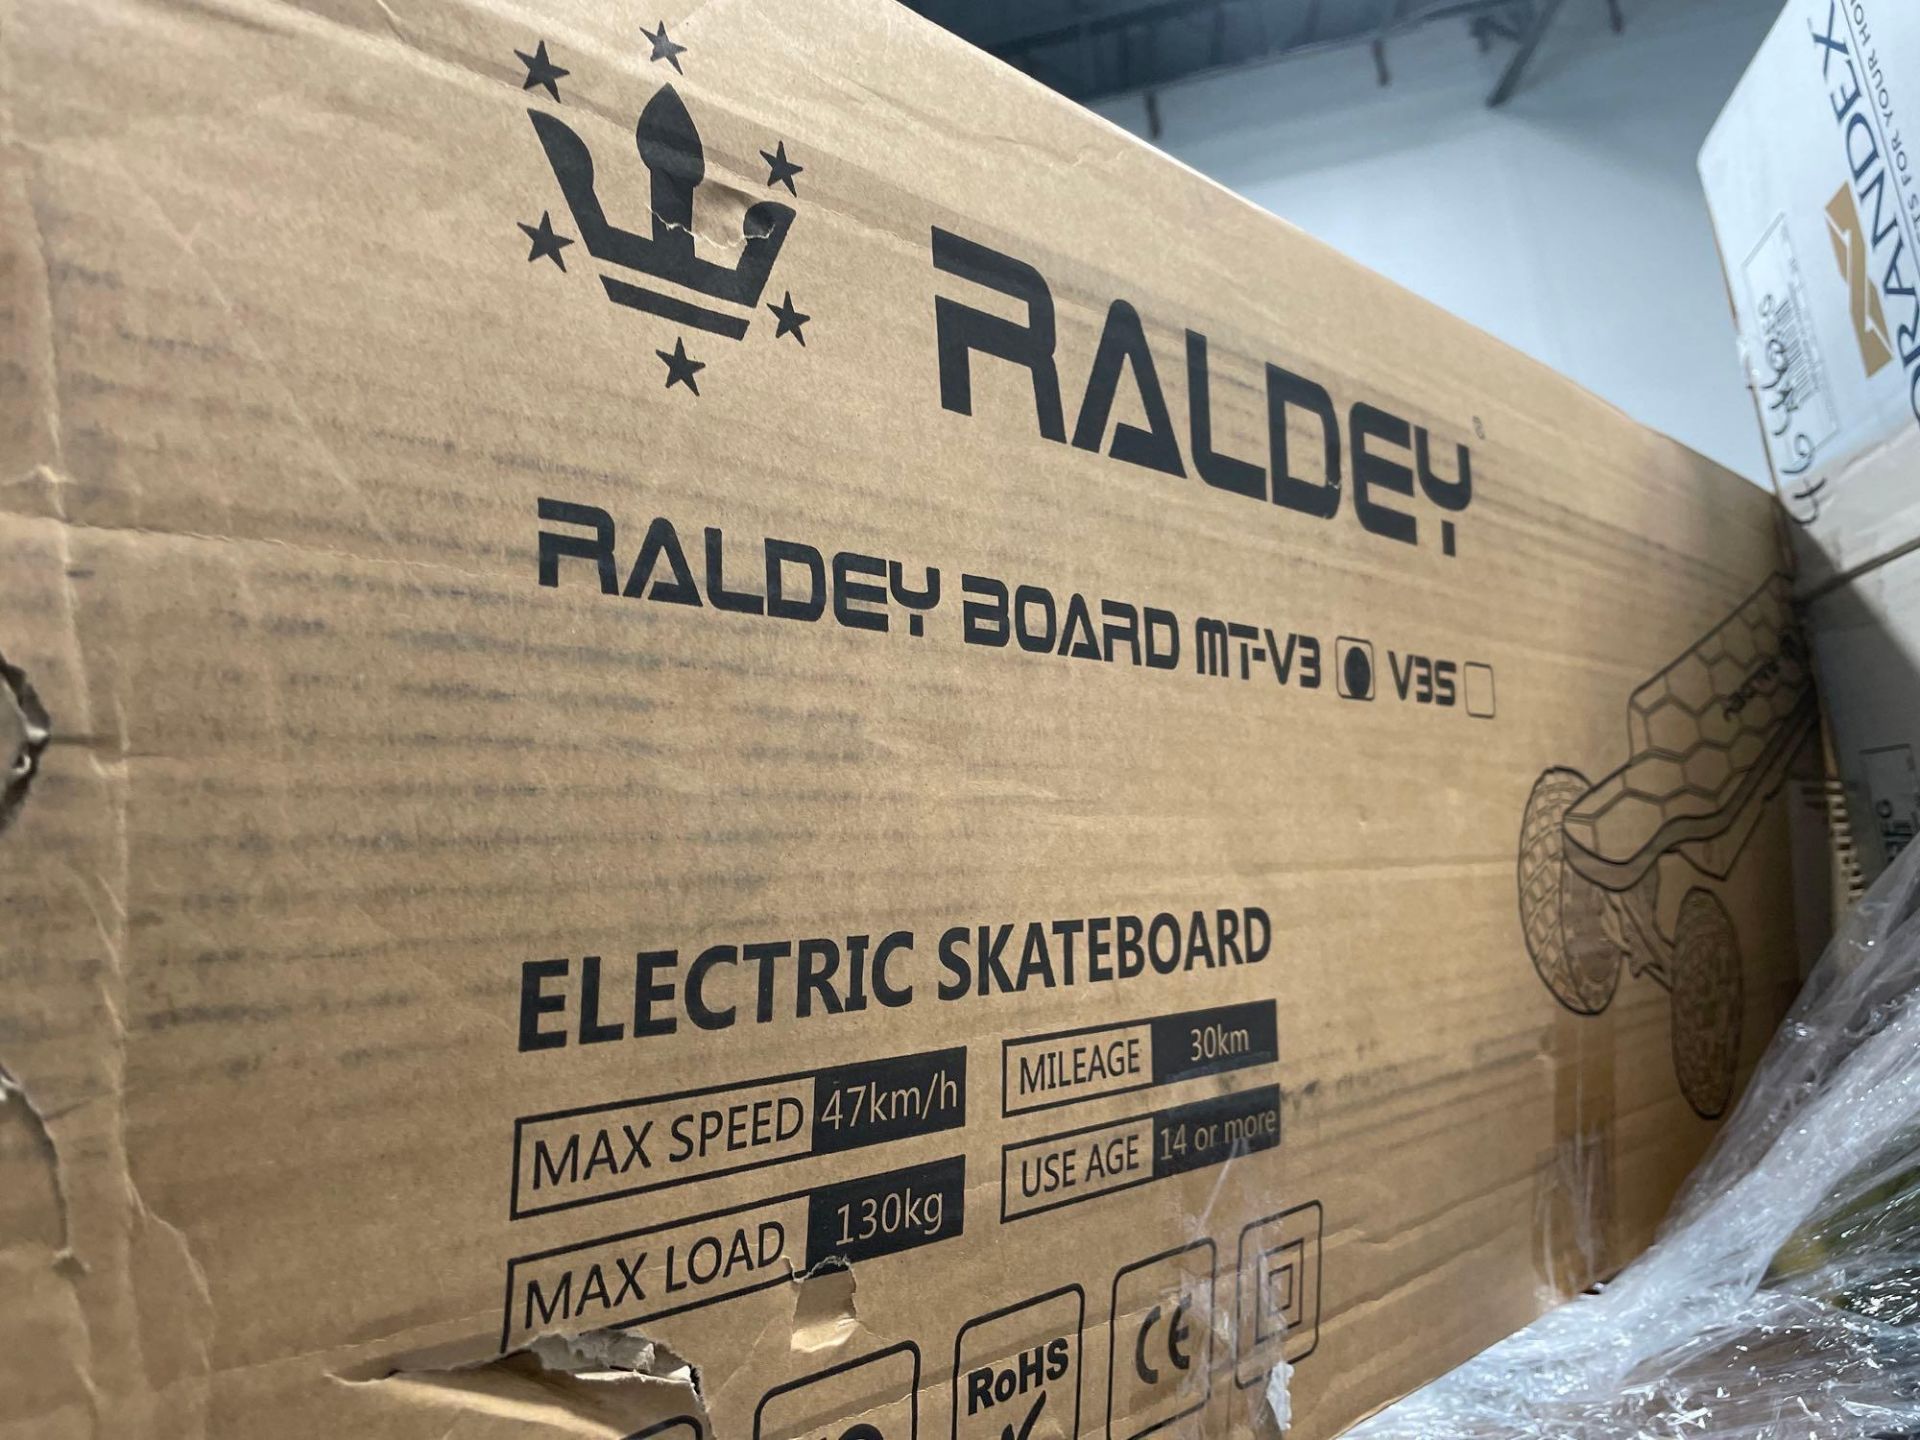 Radley Skateboard, Twin Turbo Intake and more